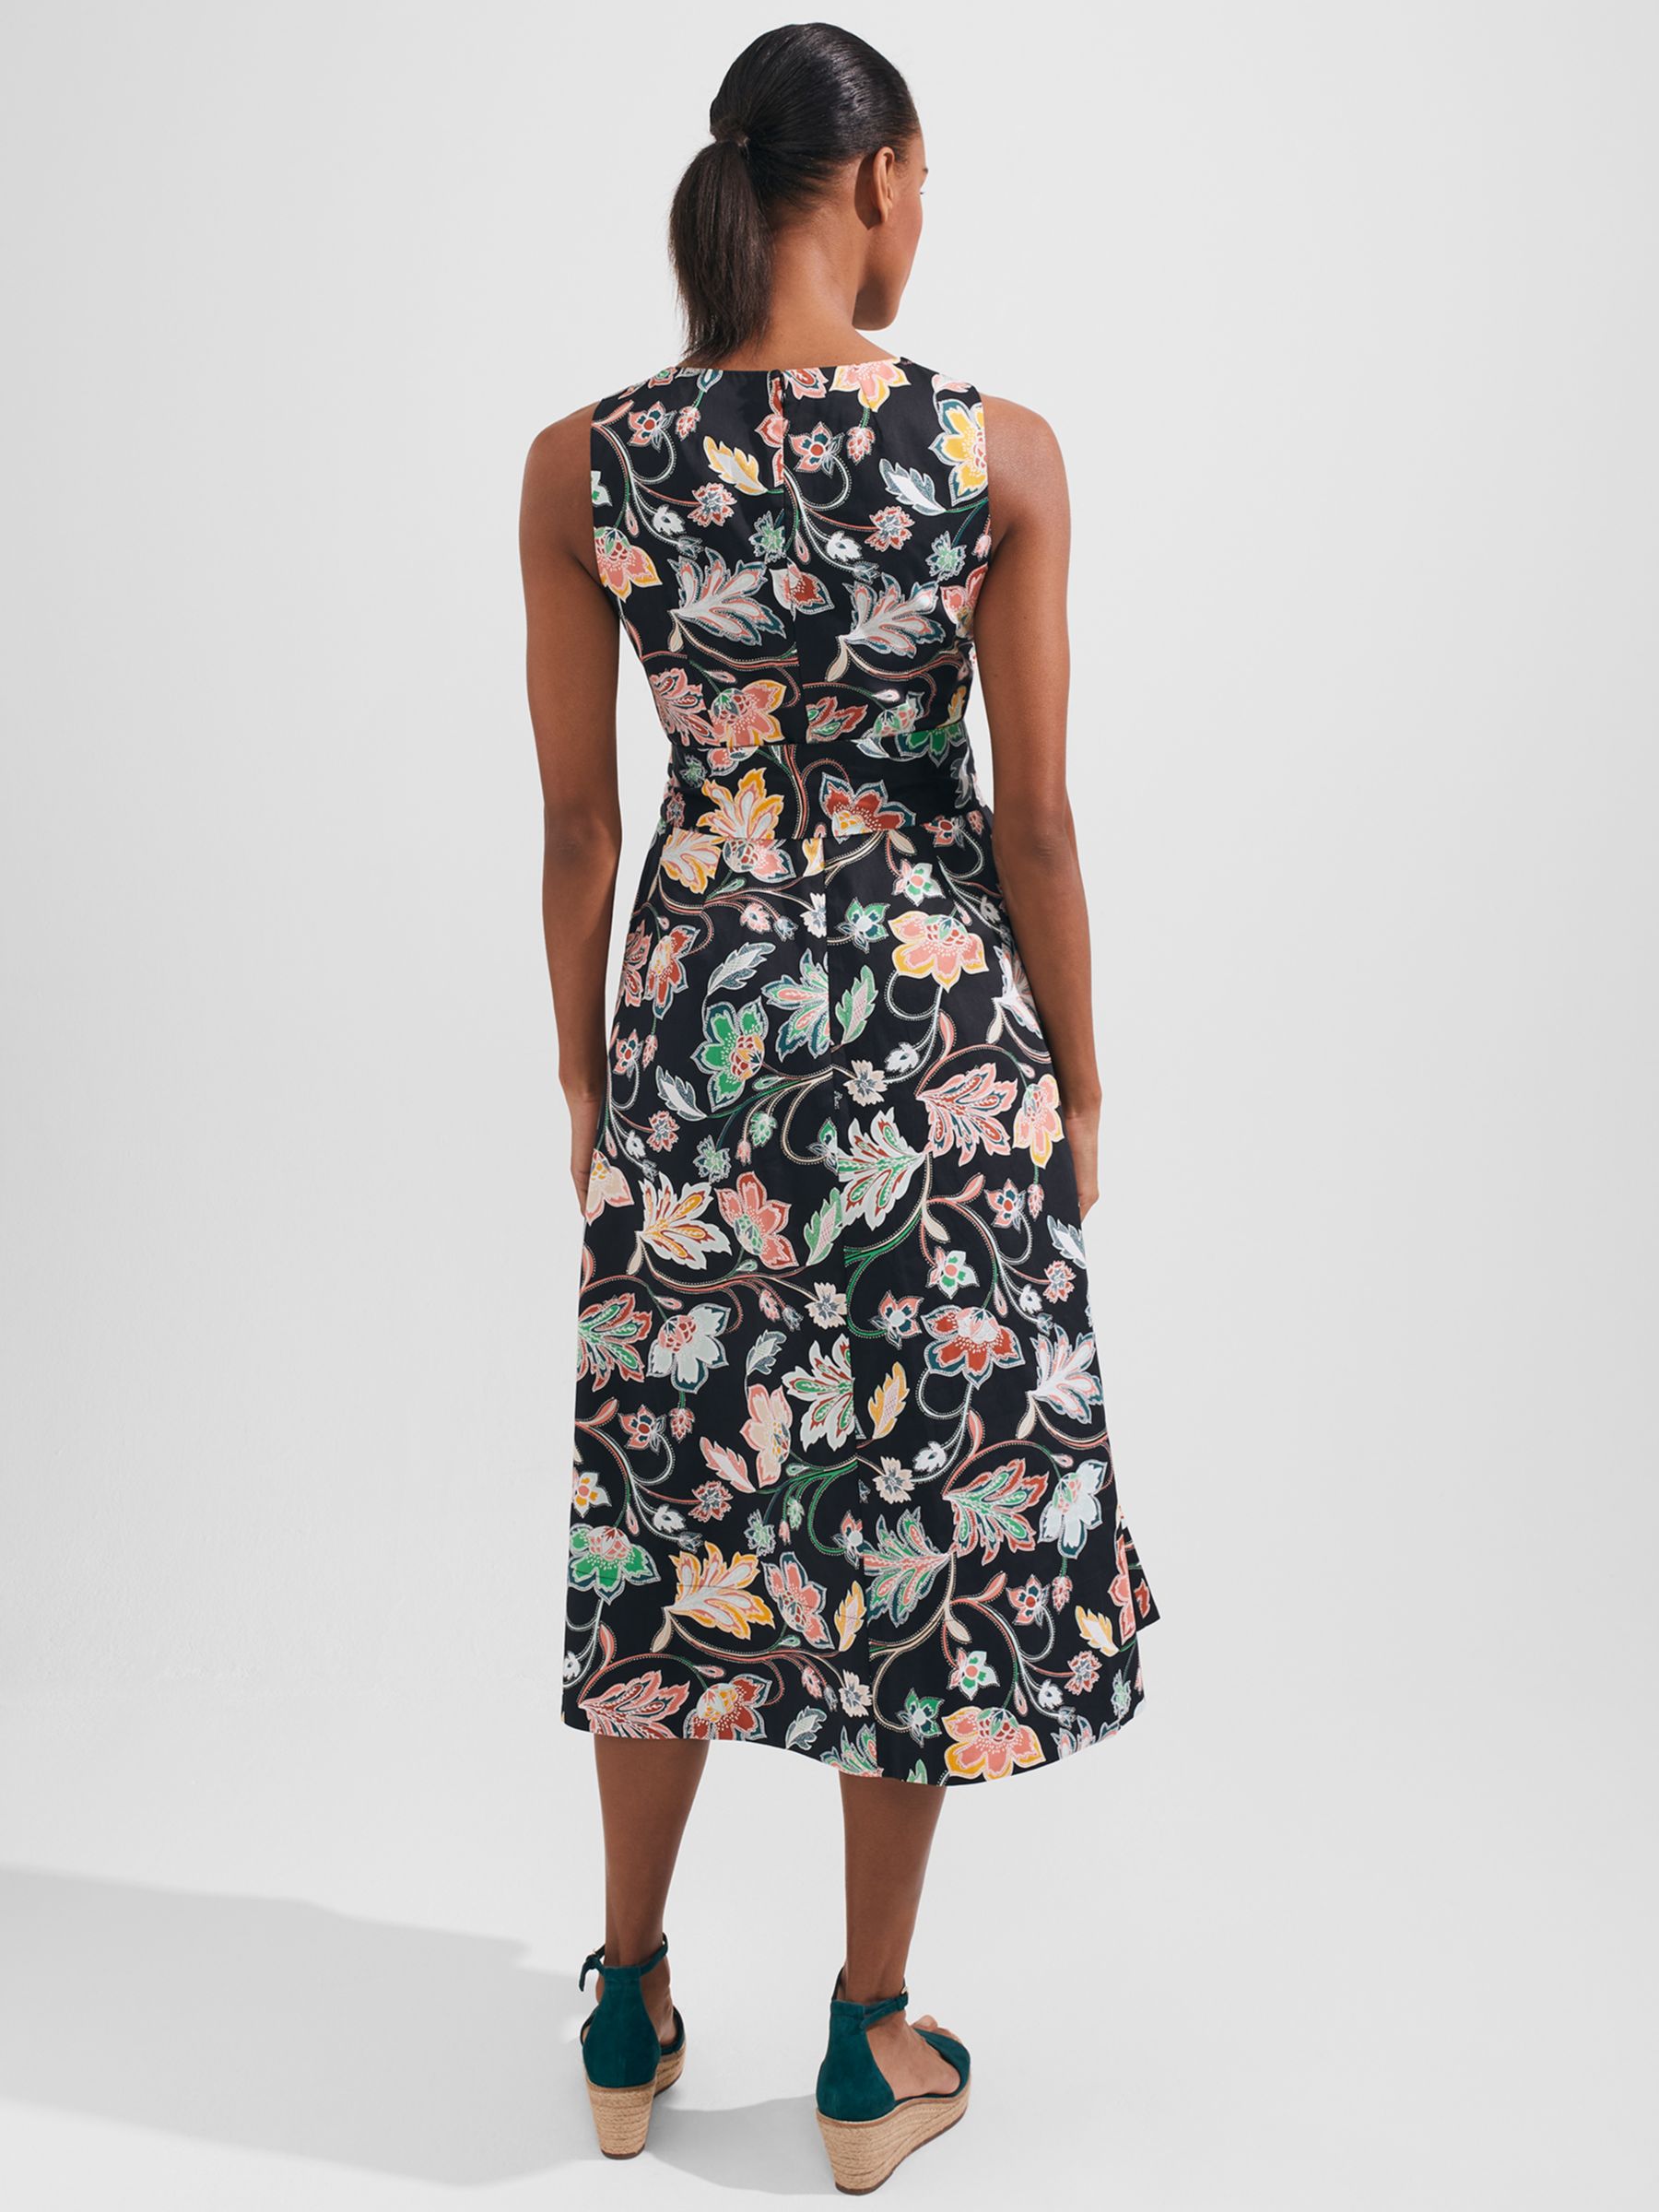 Hobbs Emilie Petite Floral Print Dress, Black/Multi, 8